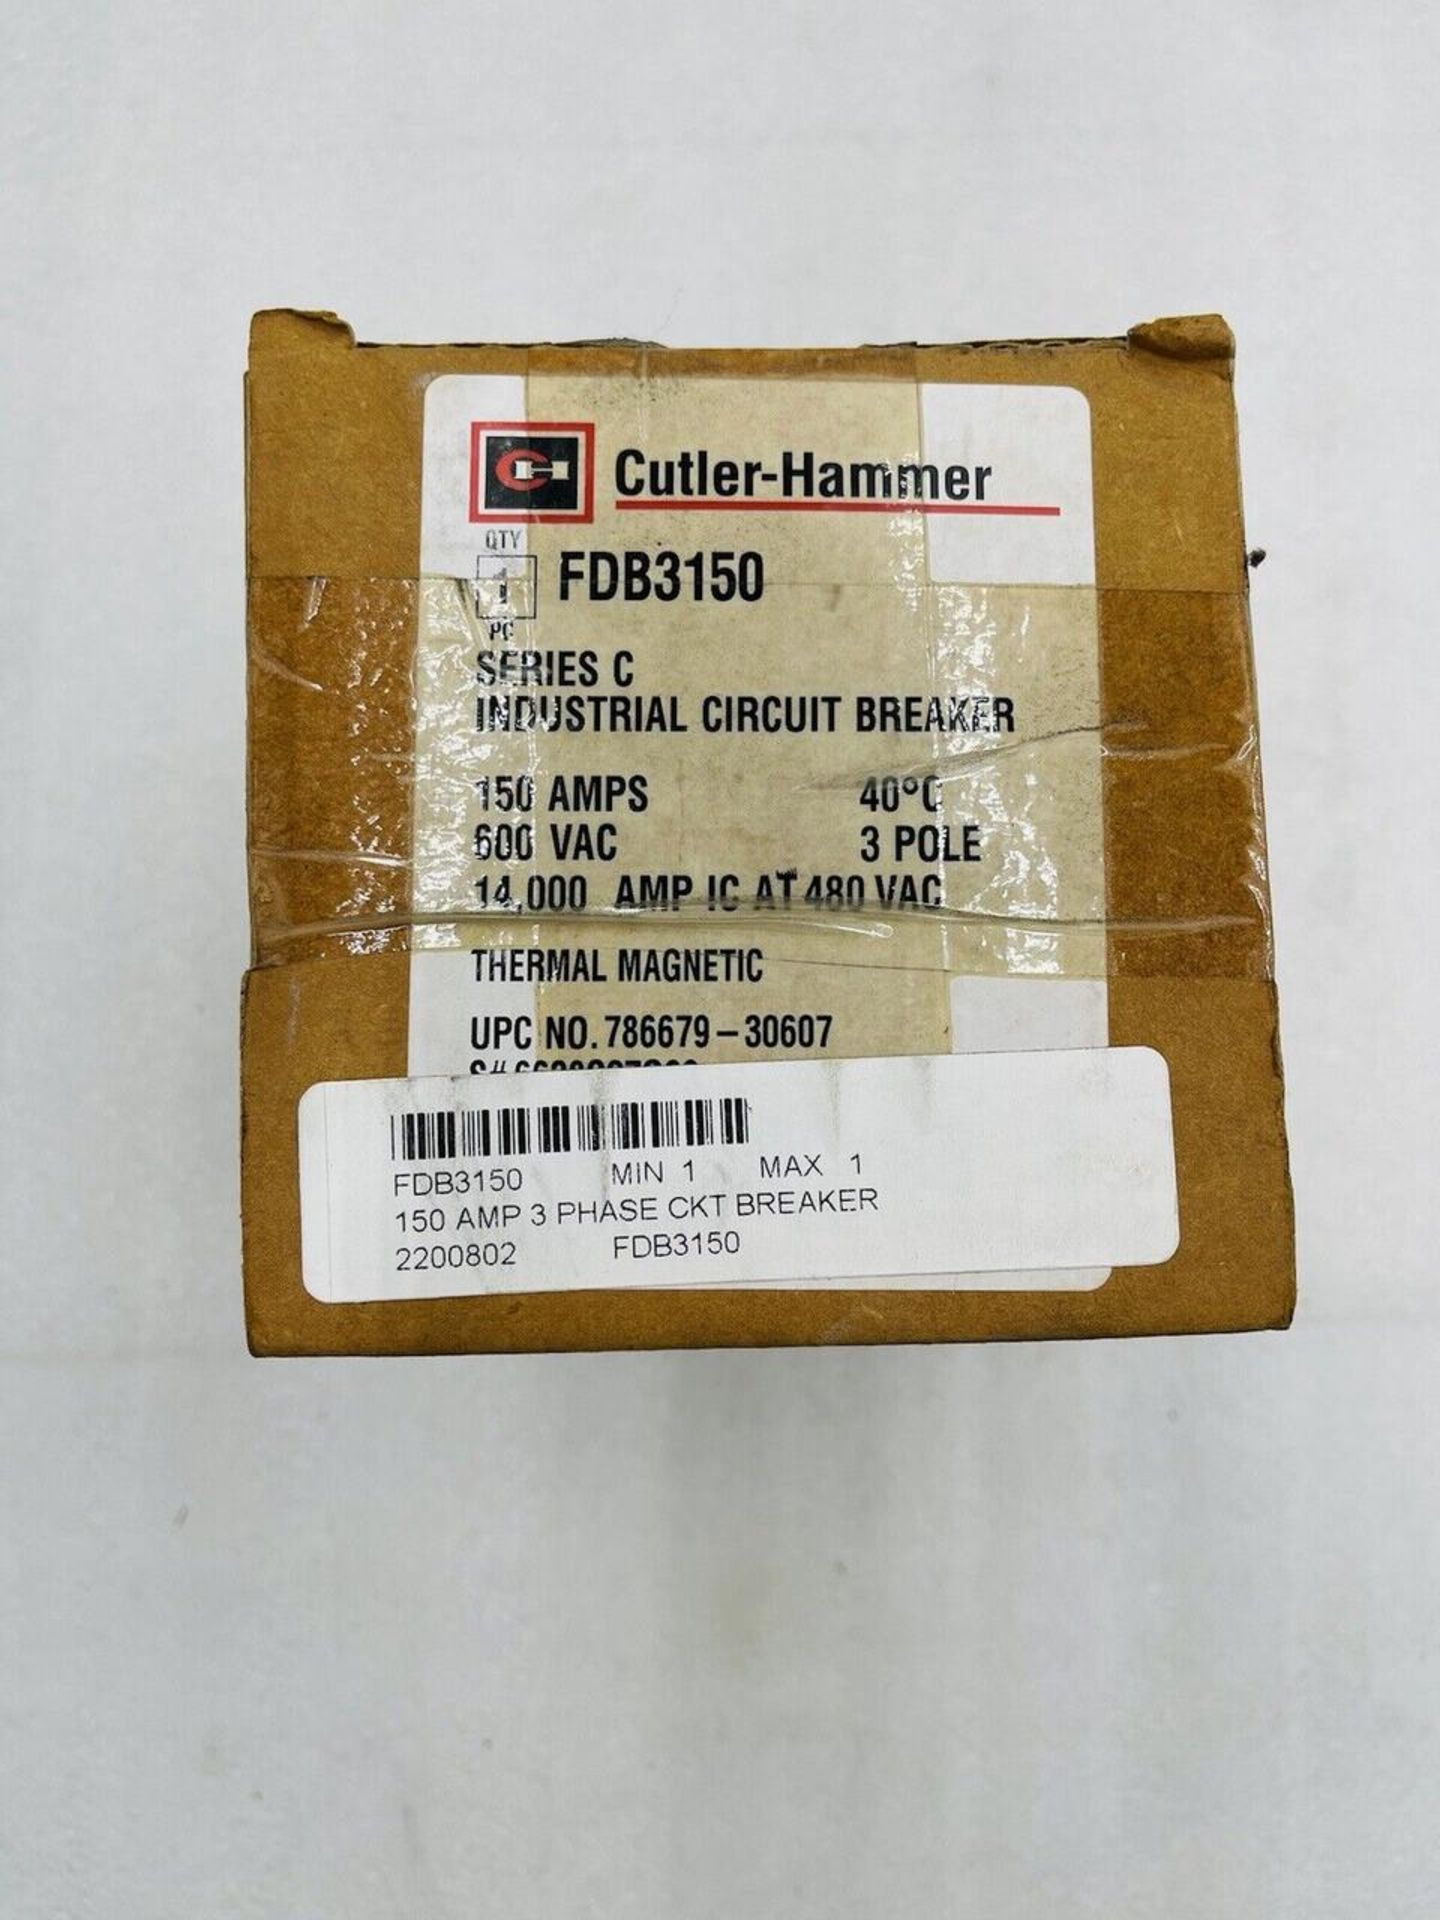 CUTLER-HAMMER CIRCUIT BREAKER FDB3150 - Image 2 of 2